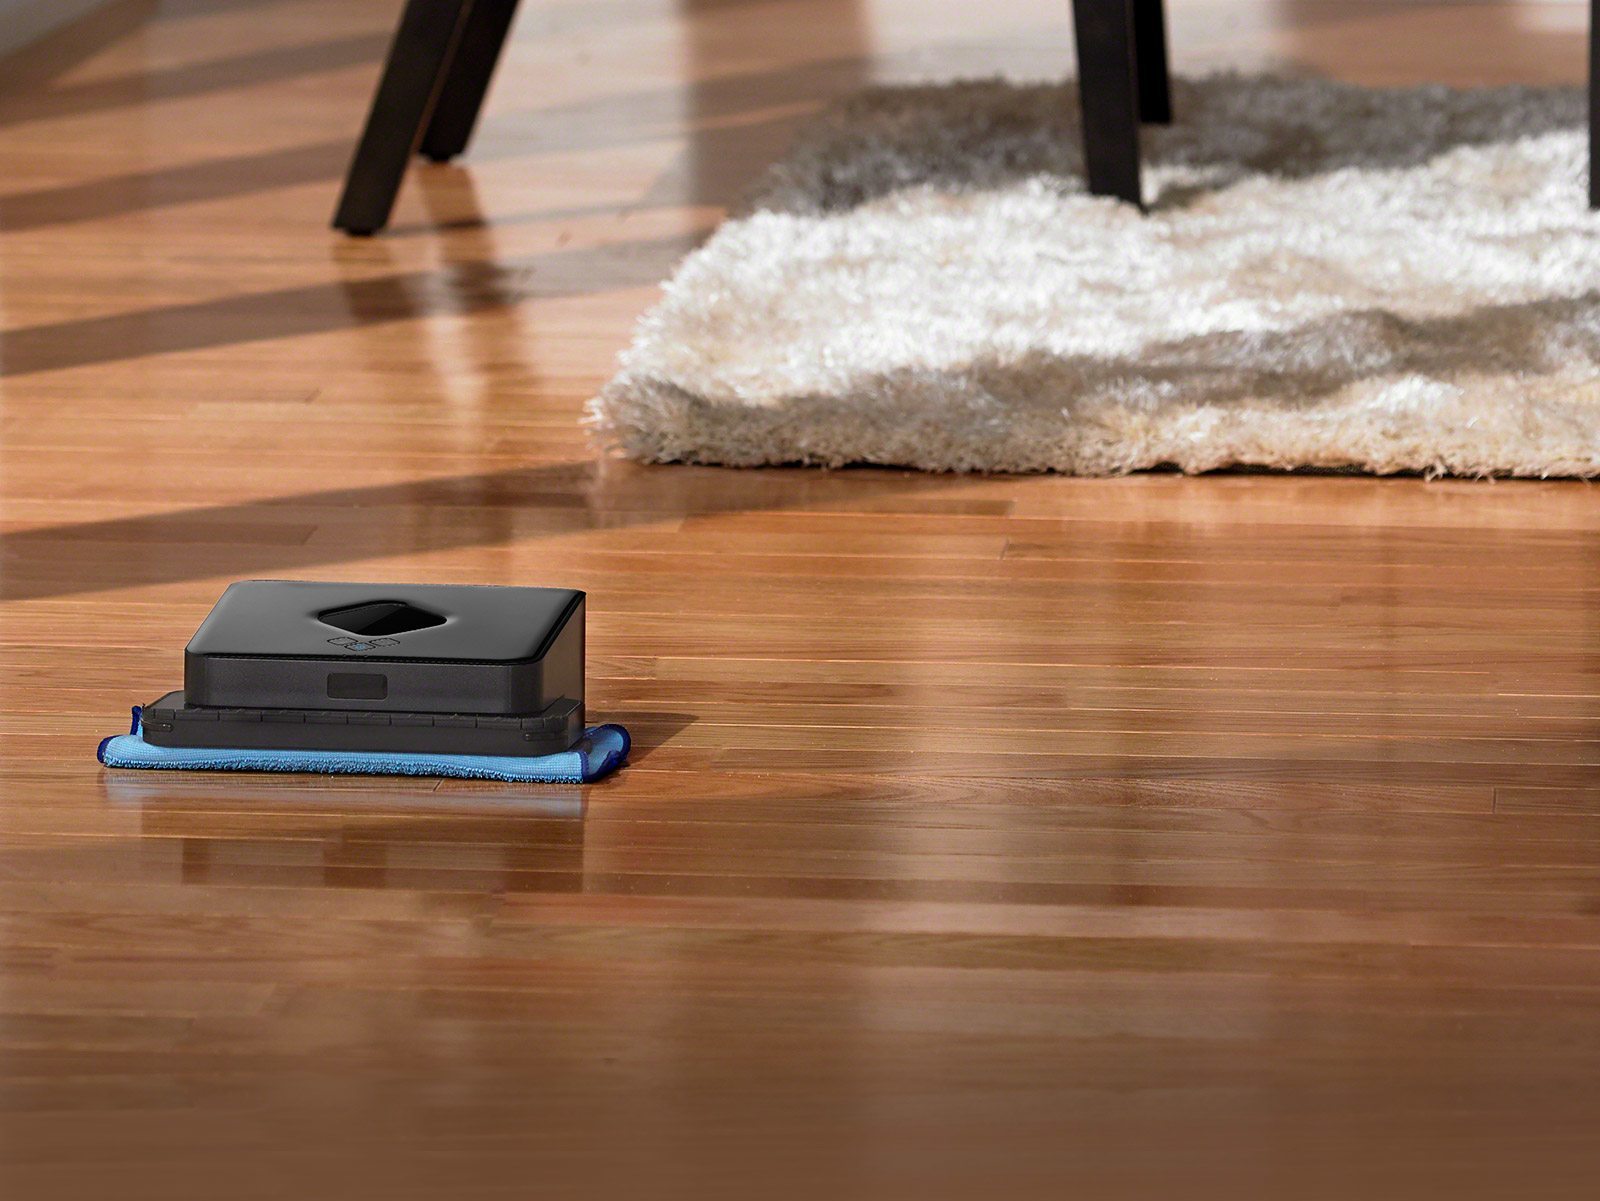 Irobot Braava 380t Mopping Robot, Roomba For Hardwood Floors